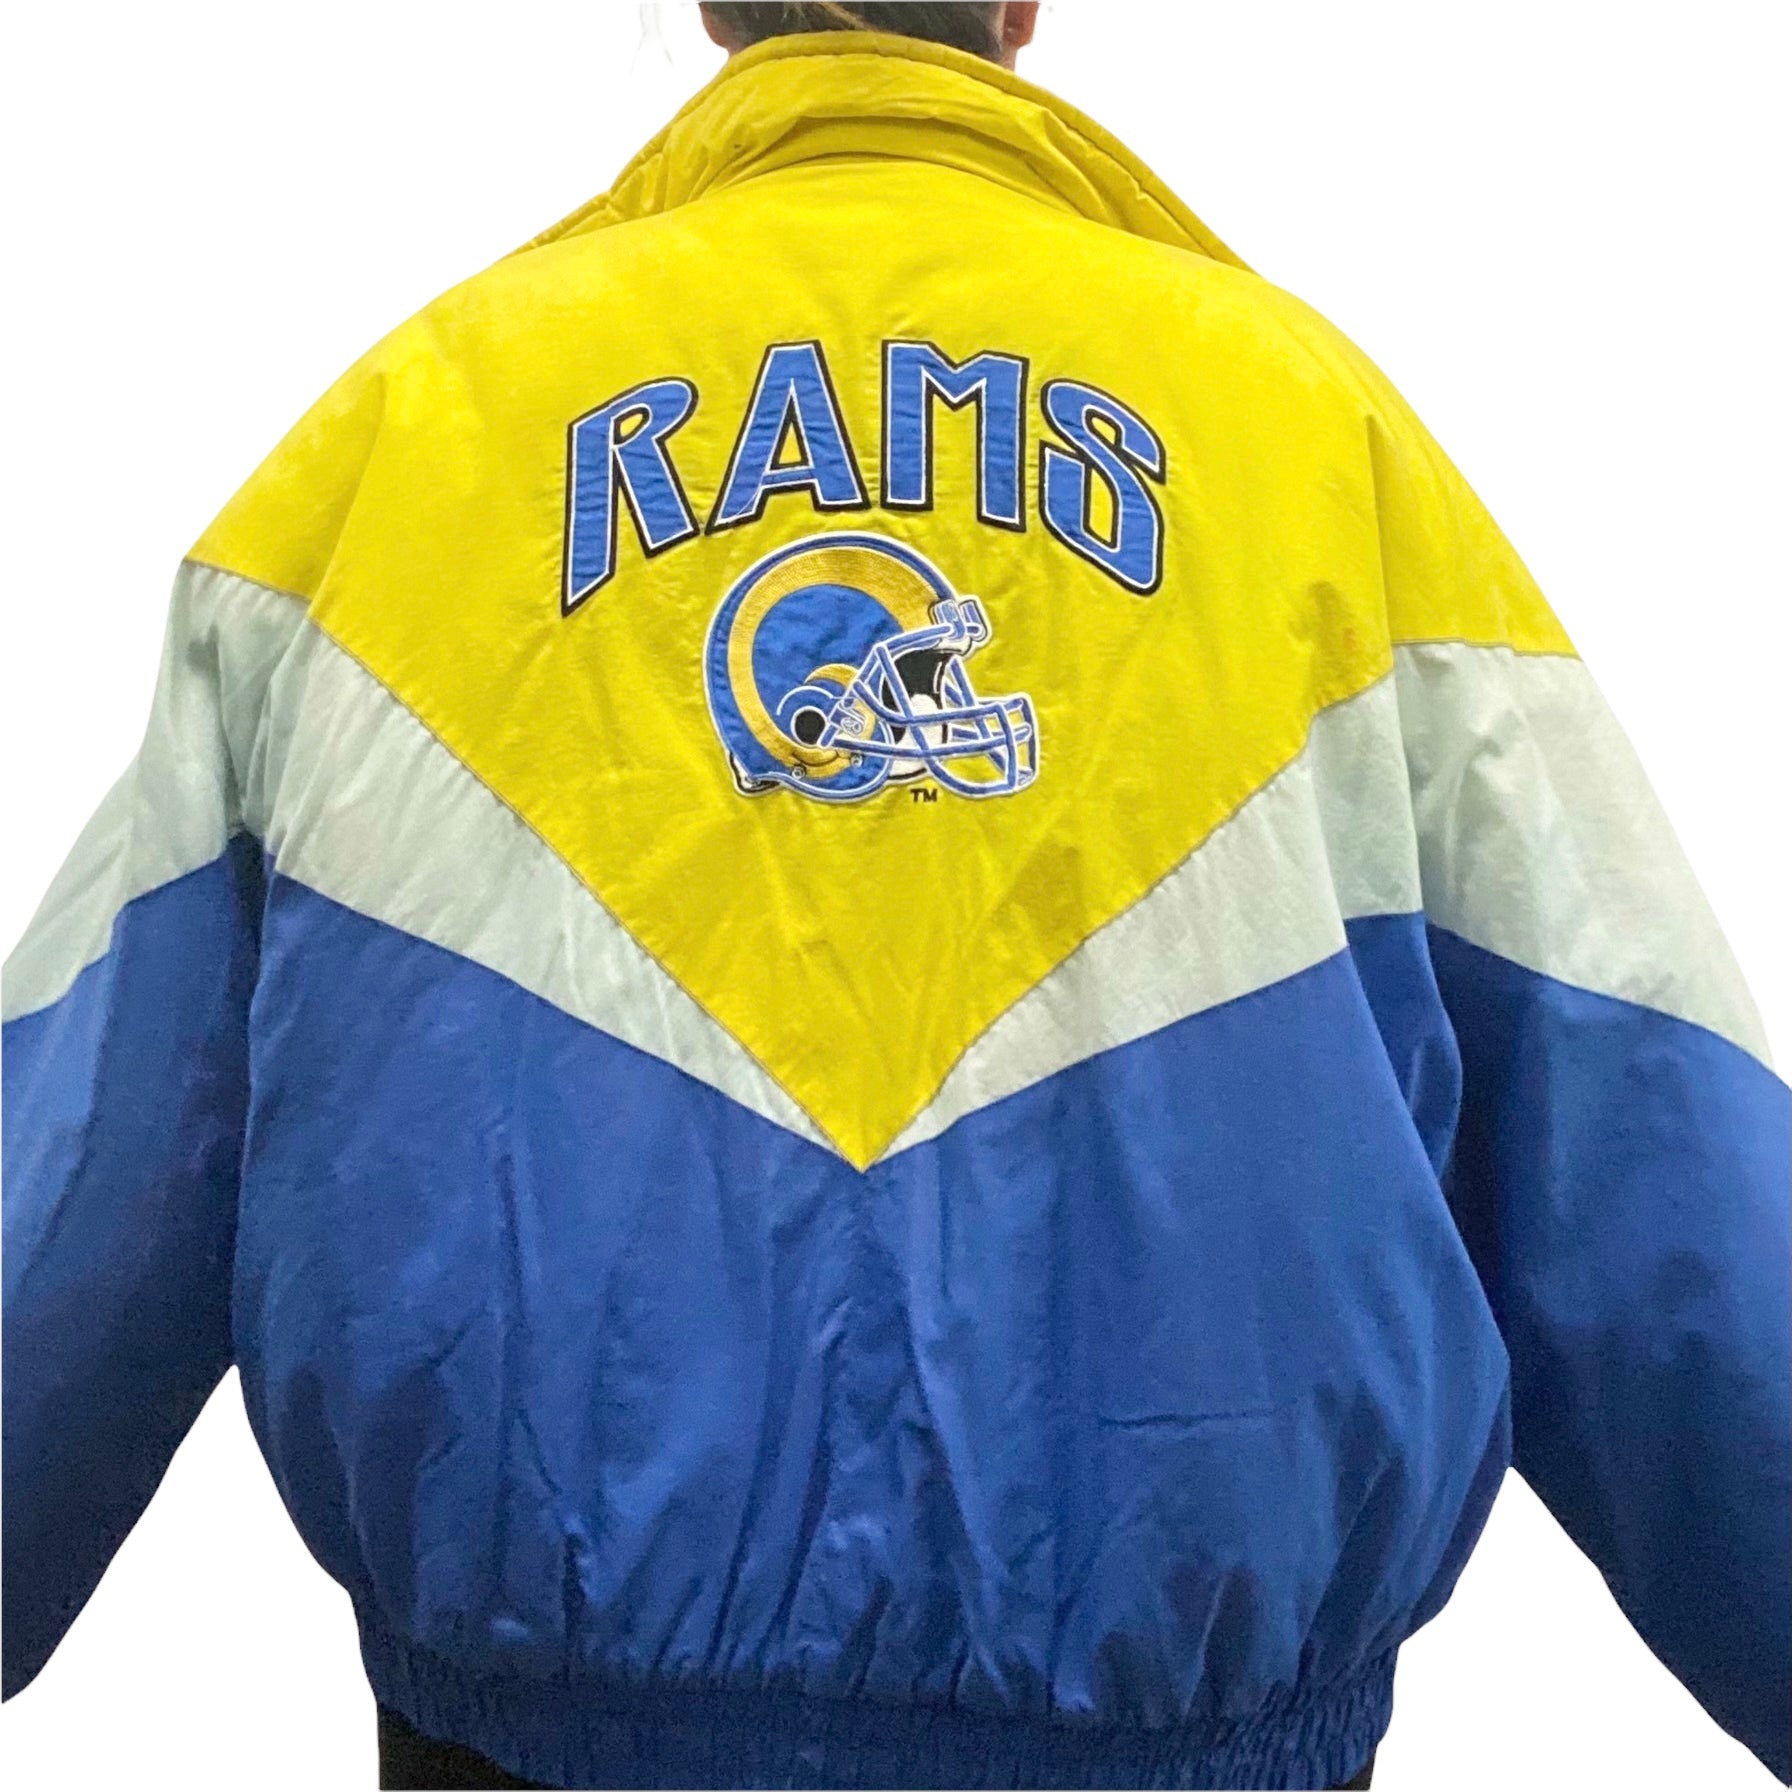 Vintage Early 90s Los Angeles LA Rams Full Zip Puffer Jacket from